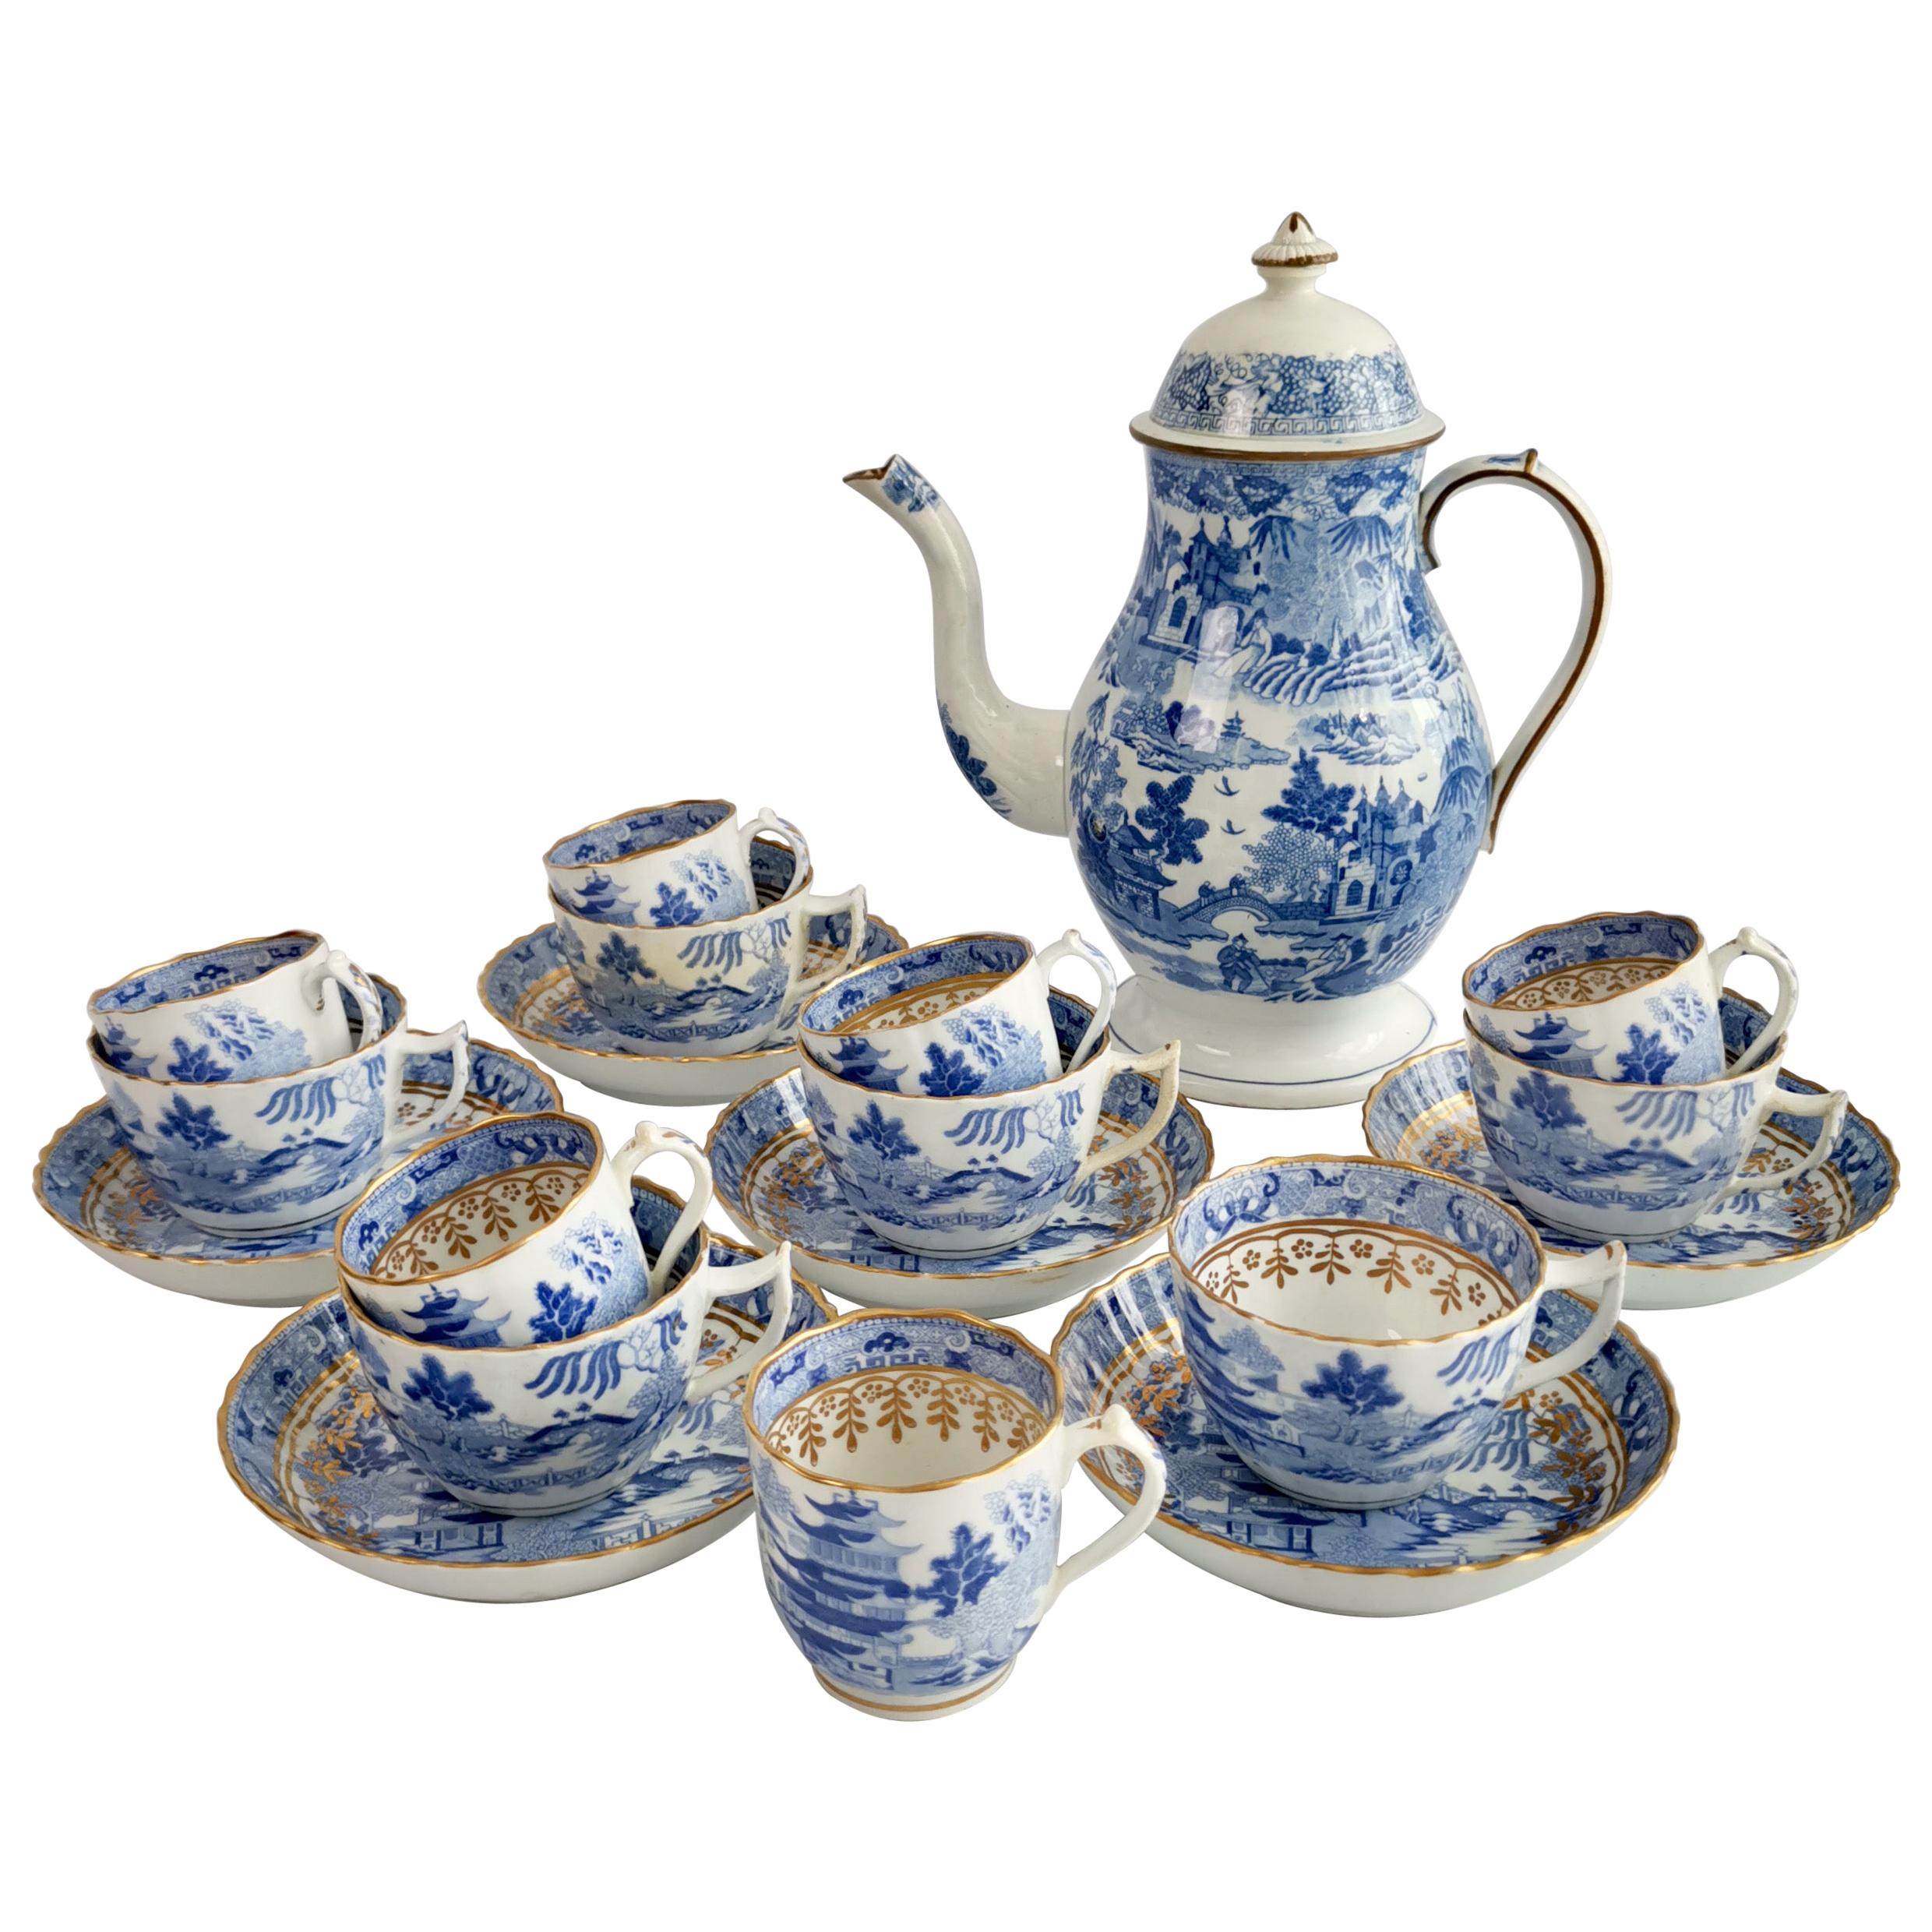 Tea Coffee Service Rathbone and Miles Mason, Pagoda Blue and White, 1810-1815